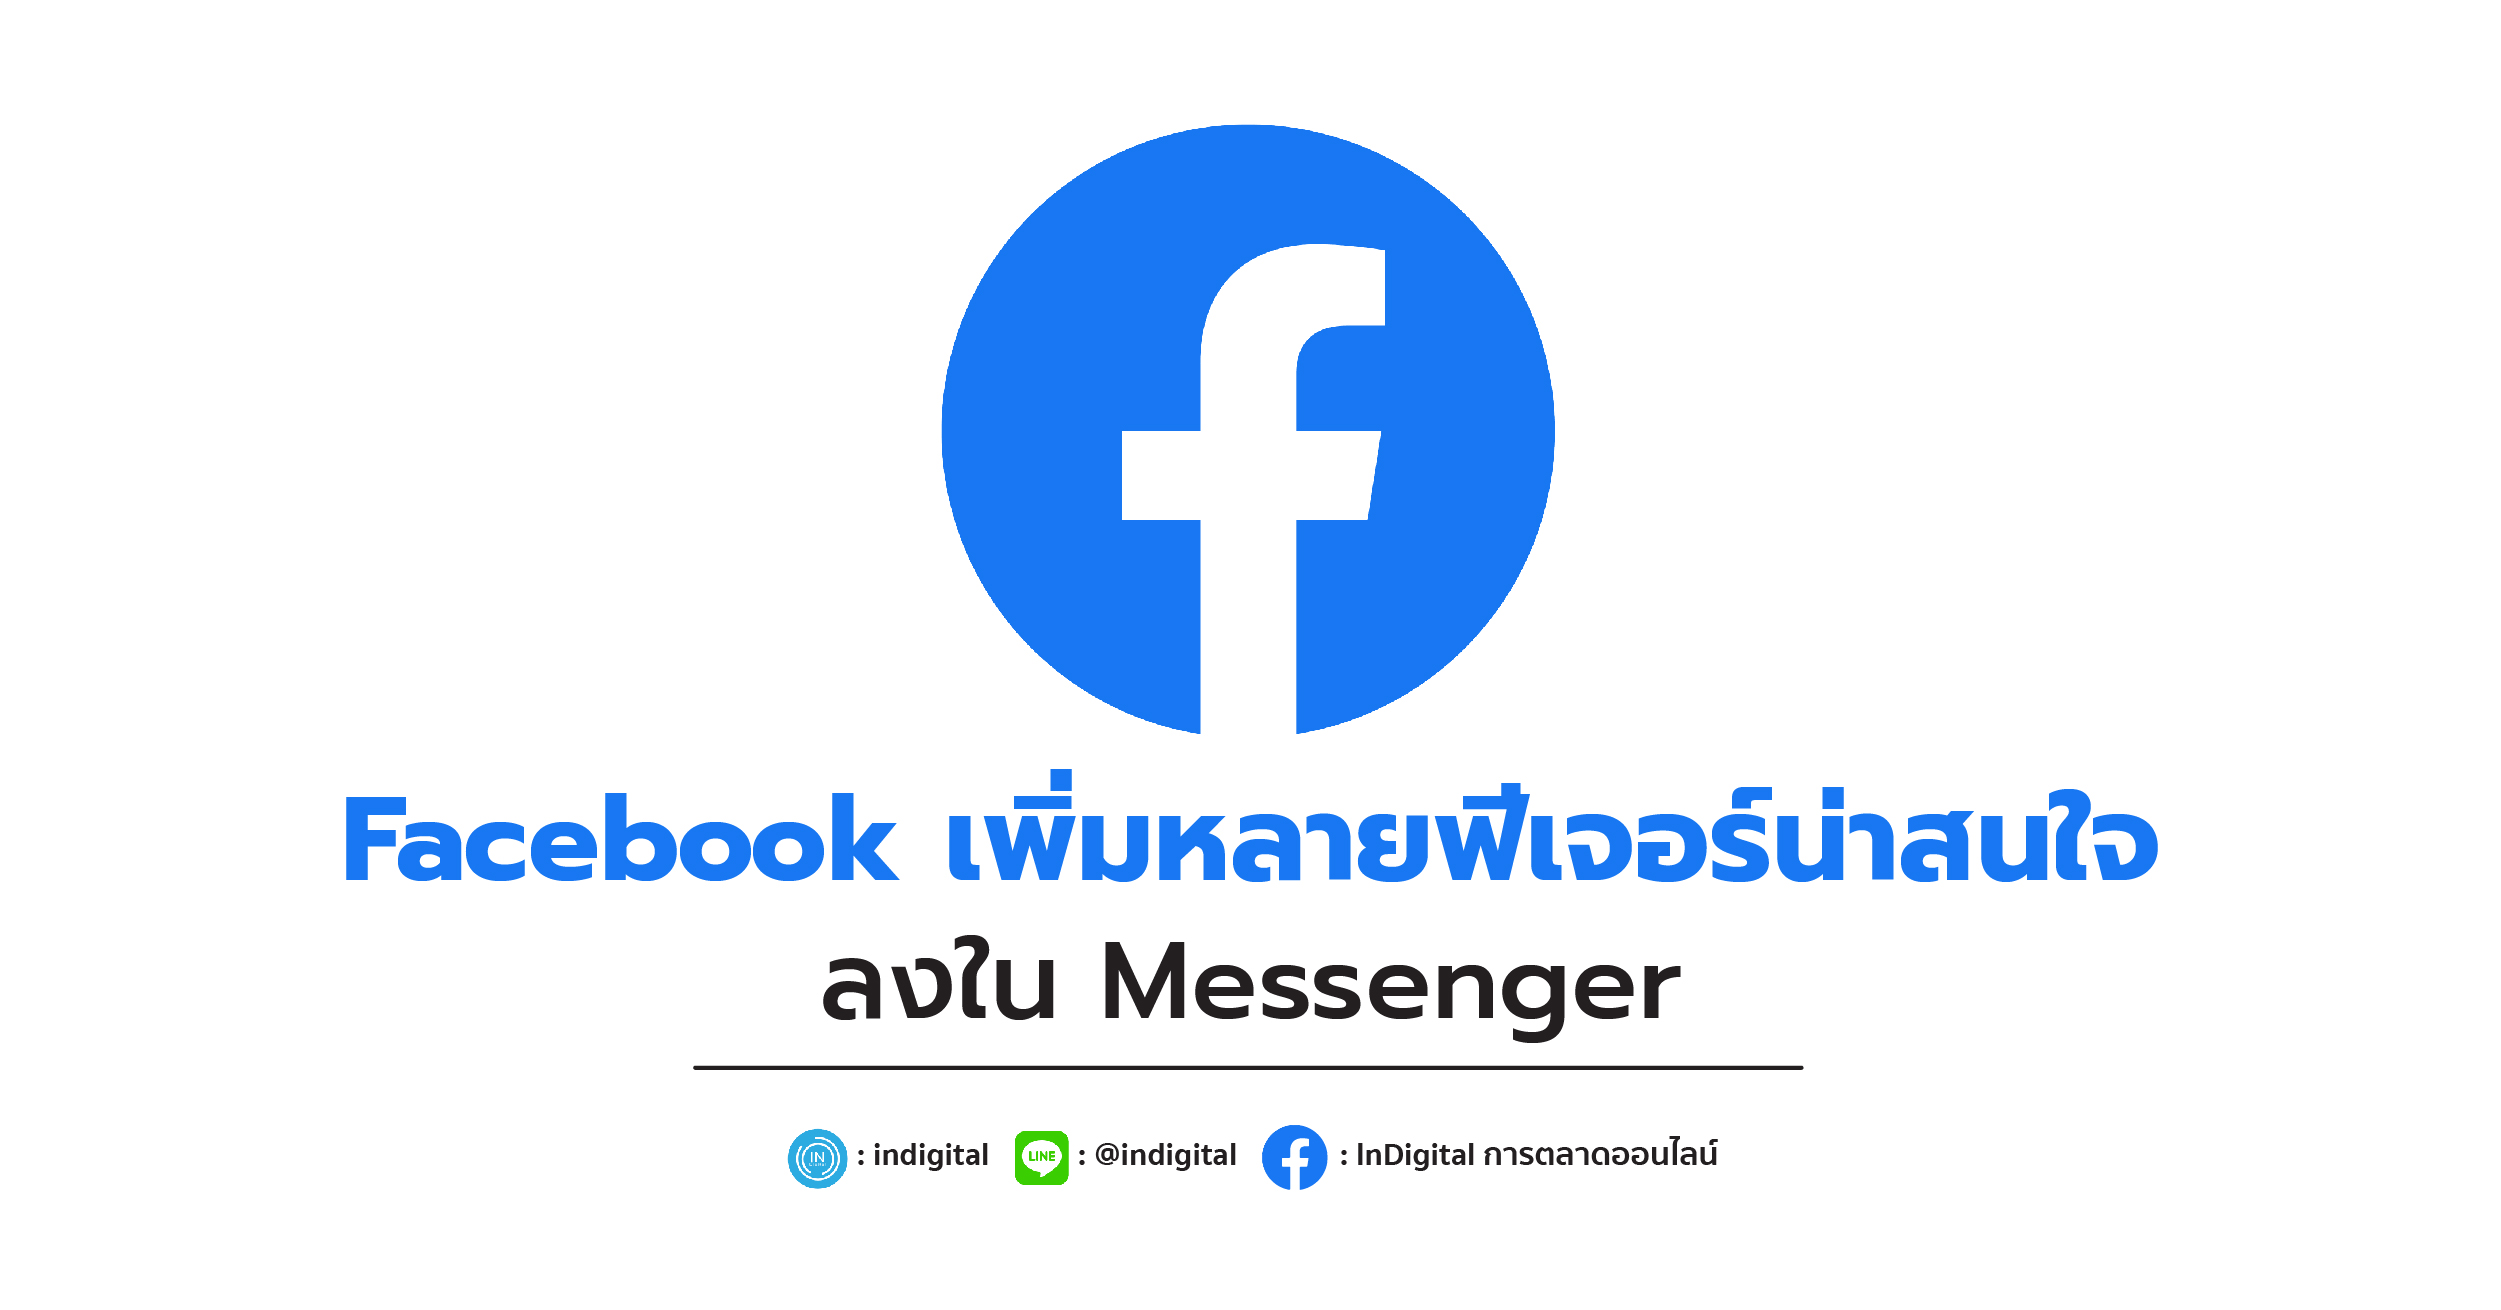 Fcaebook, Instagram, Direct Message, Messenger, Facebook เพิ่มหลายฟีเจอร์น่าสนใจ ลงใน Messenger